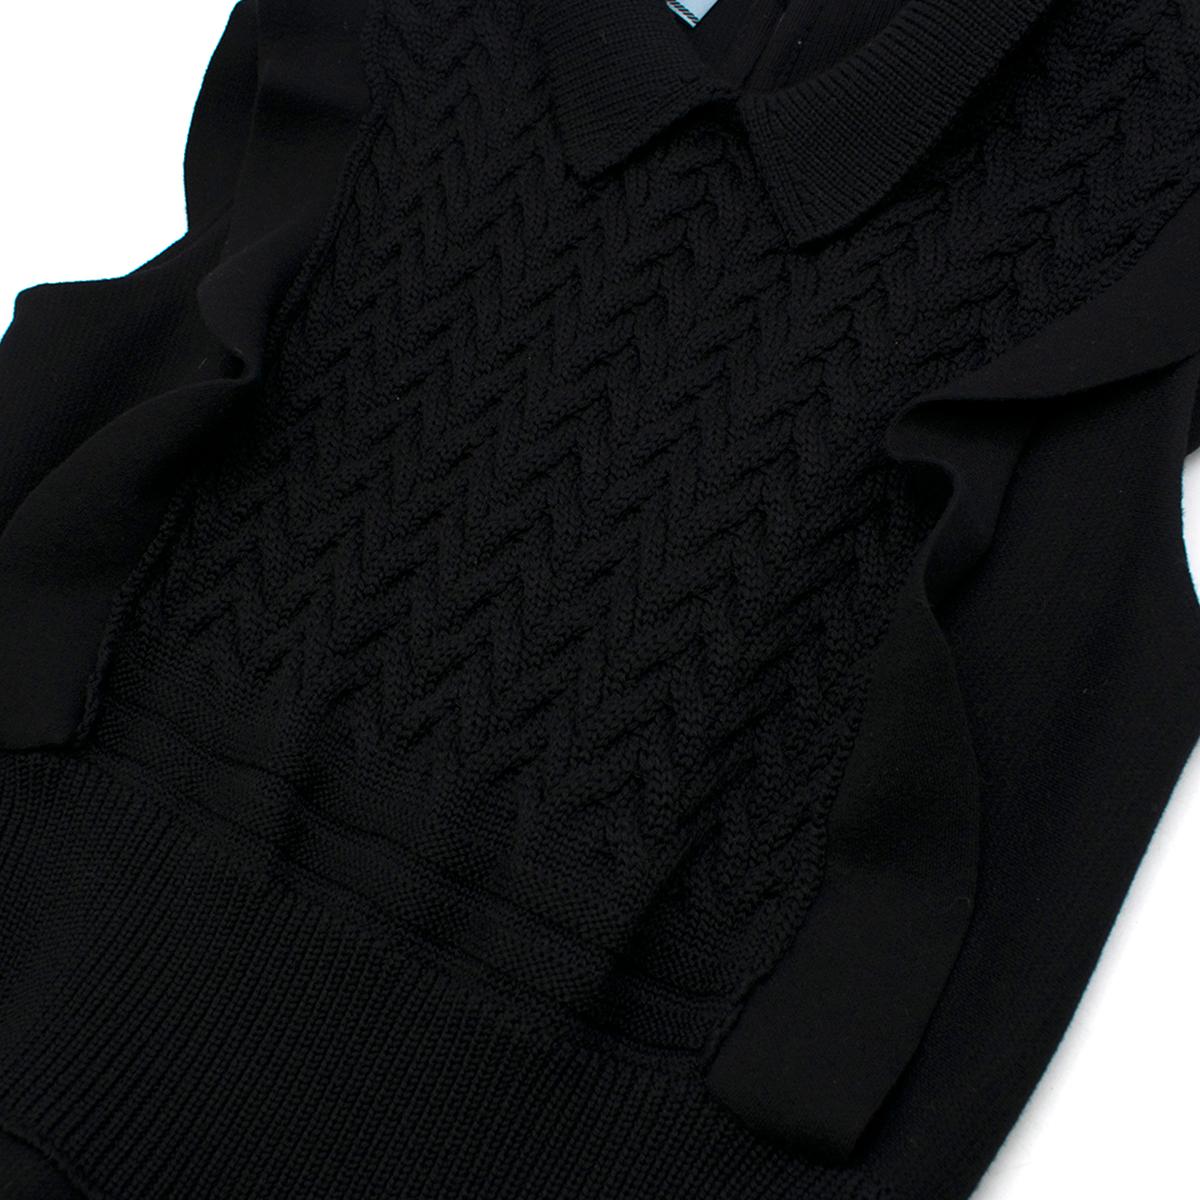 Prada Black Wool-blend Knit Dress - Size US 8 2